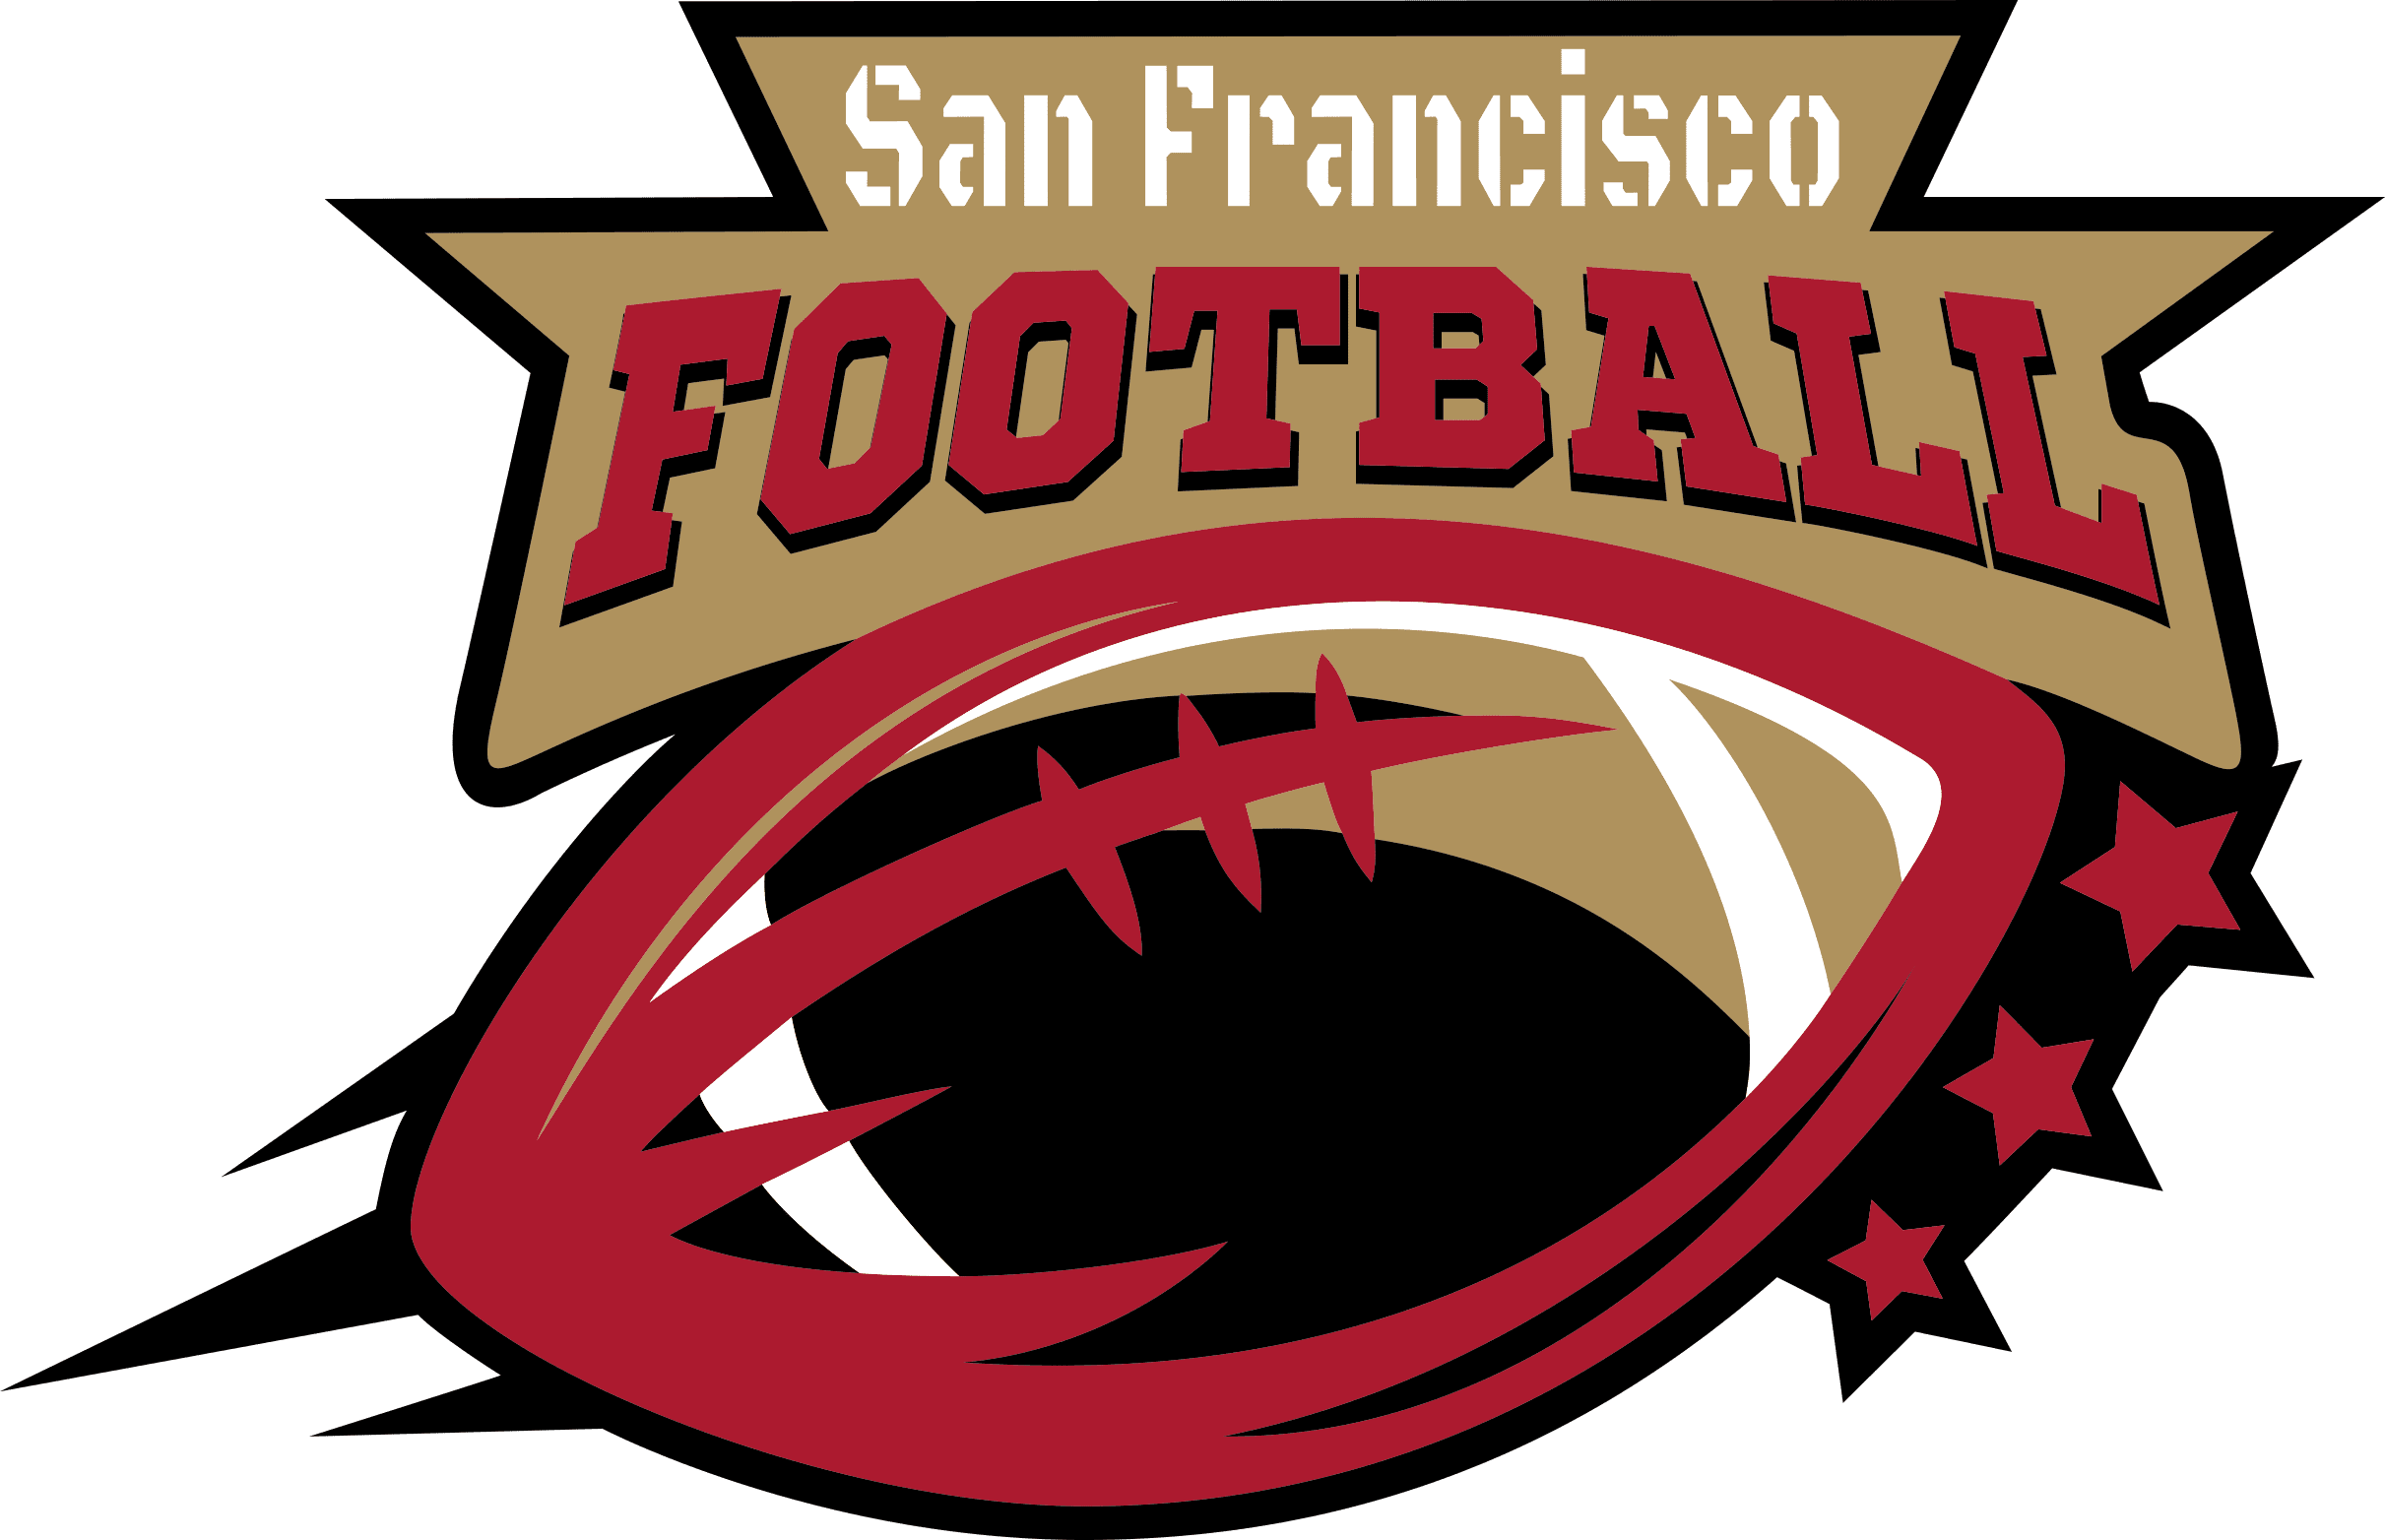 San Francisco 49ers Official NFL Football Team Logo Poster - Starline Inc.